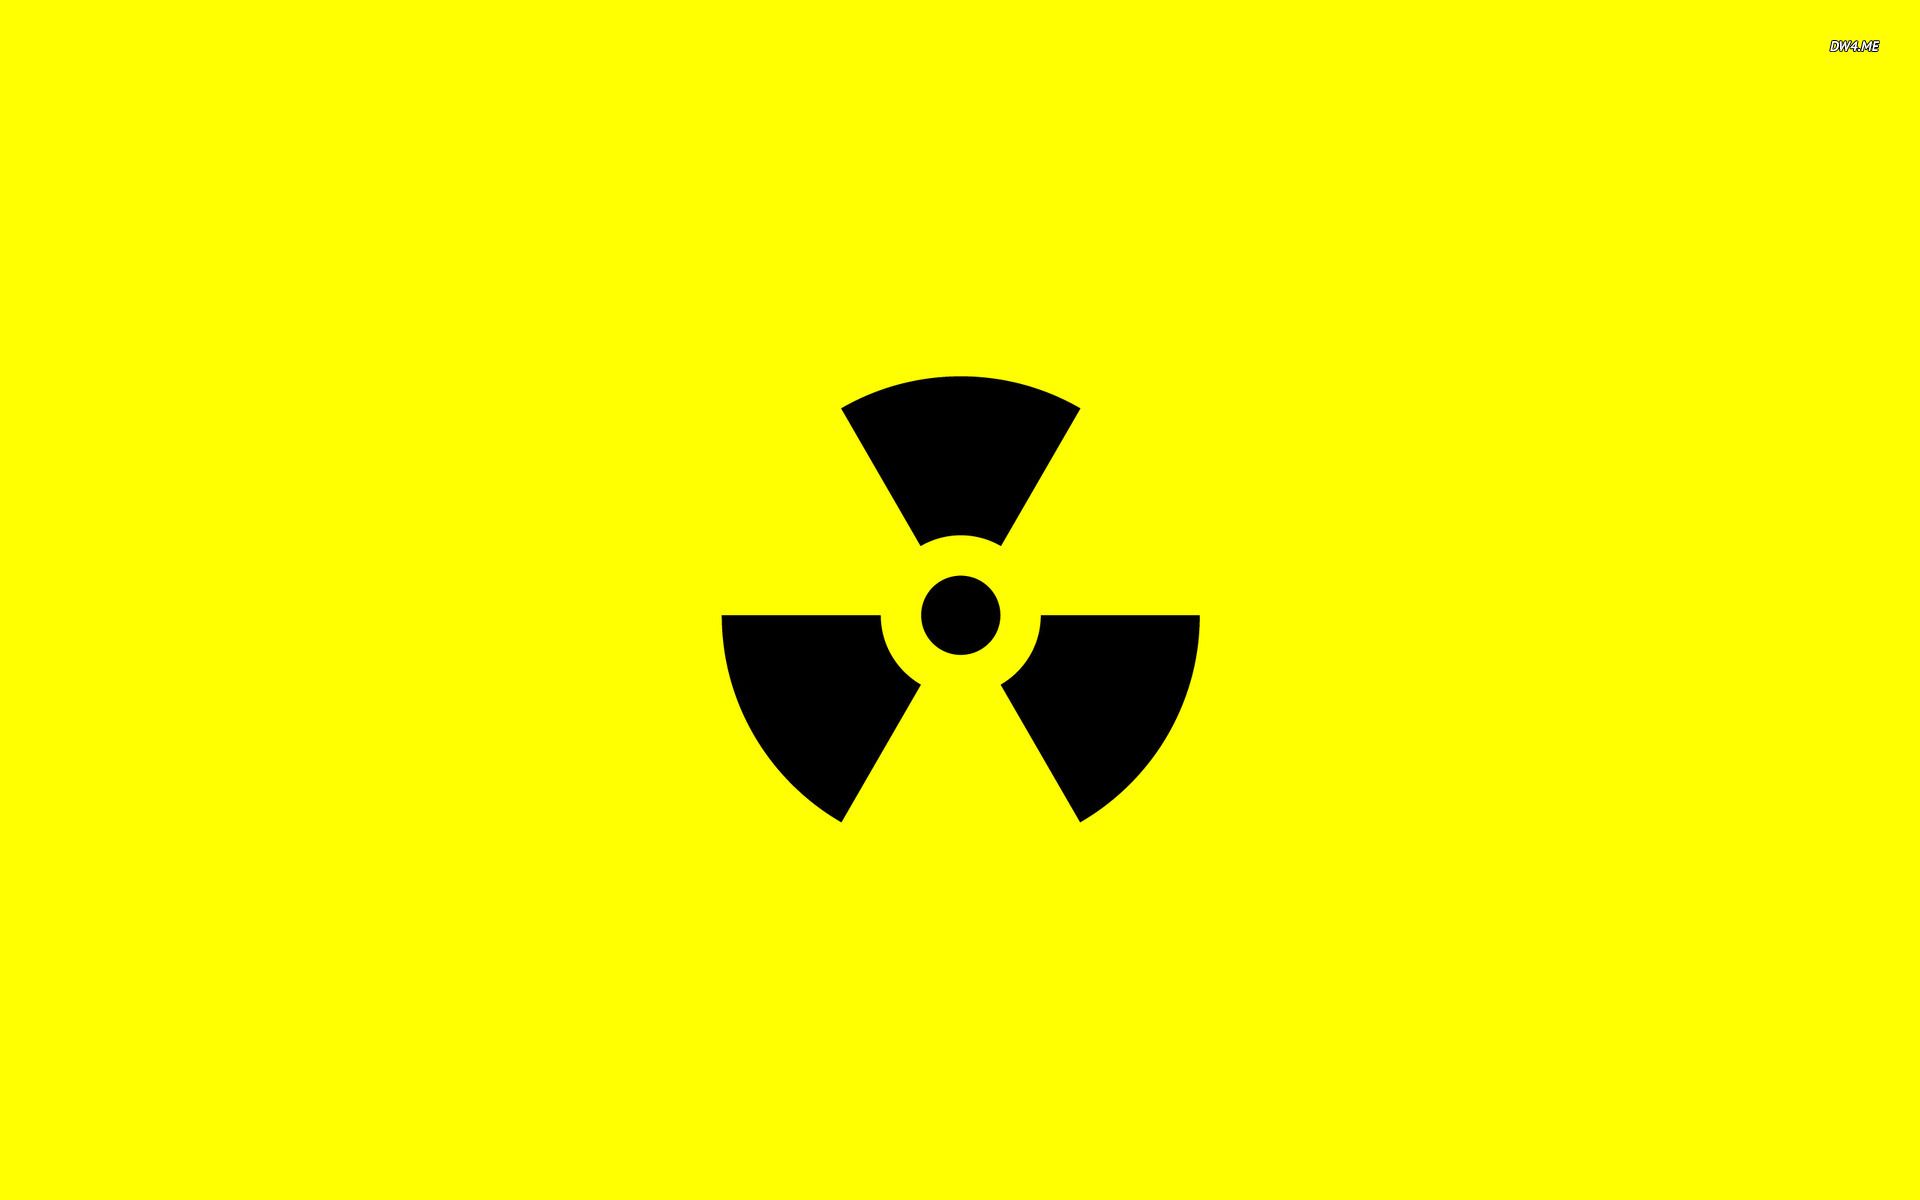 Radioactive Symbol